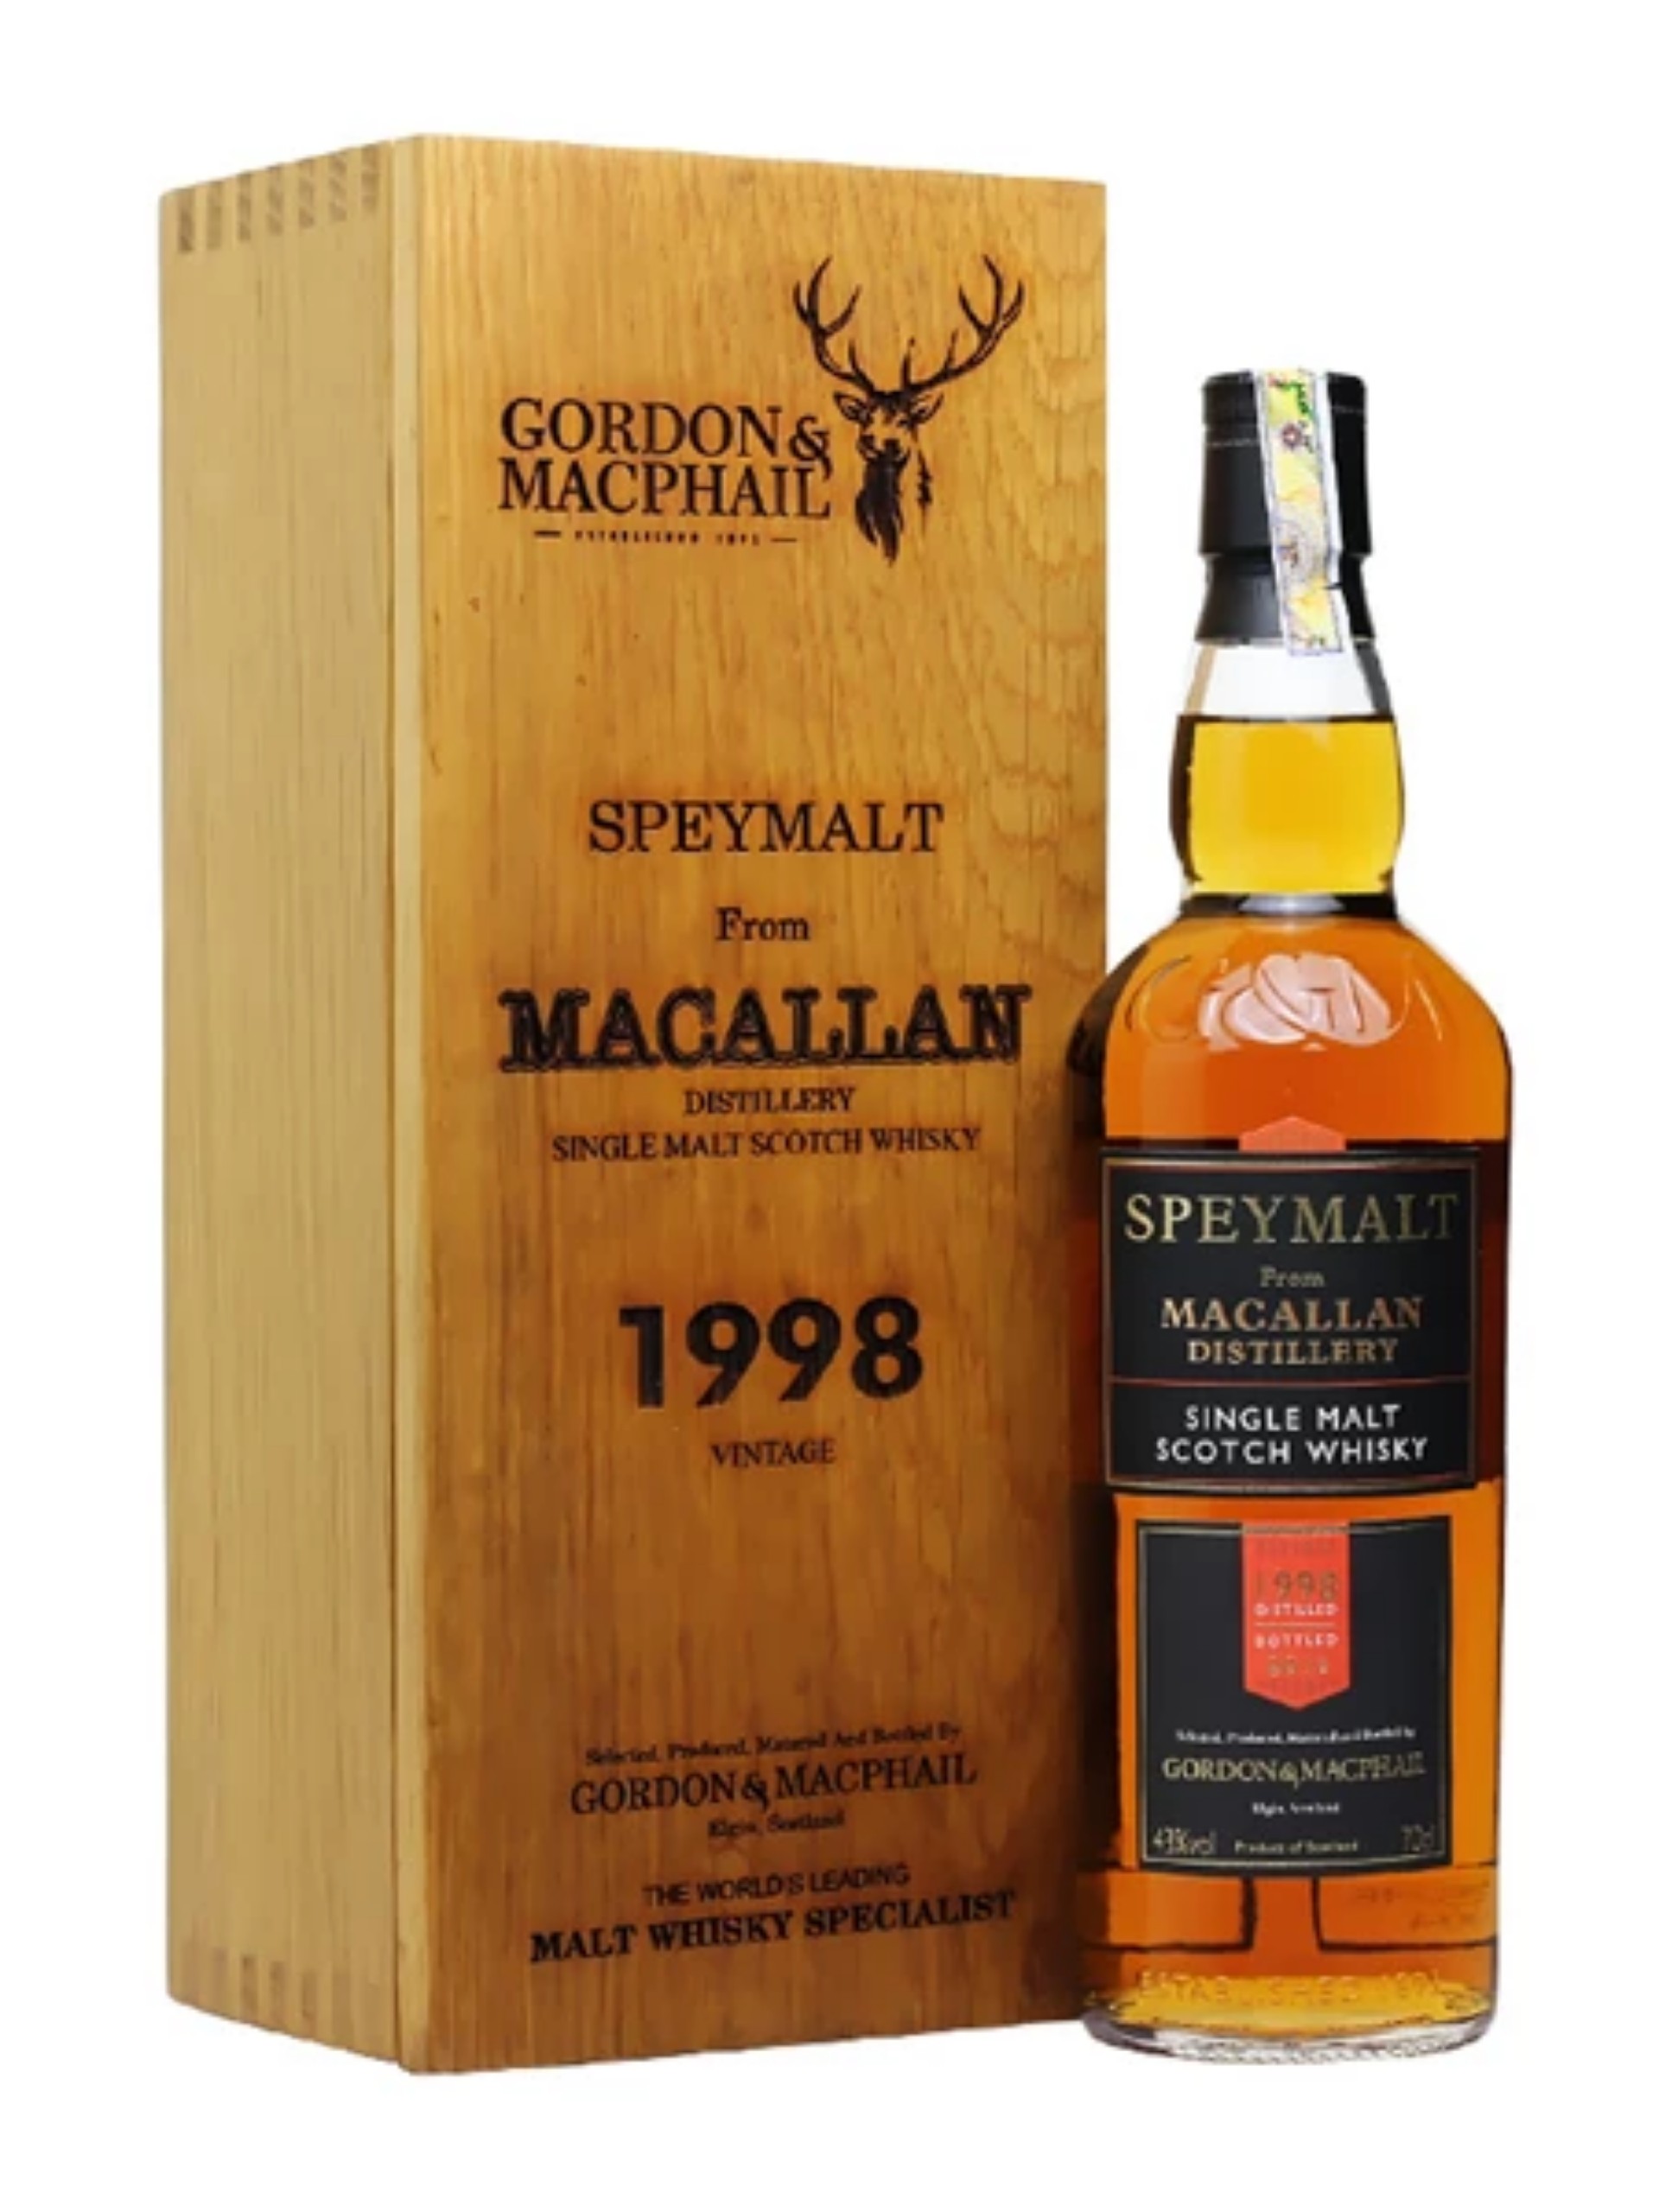 Whisky Macallan 1998-2016, Gordon & Macphail